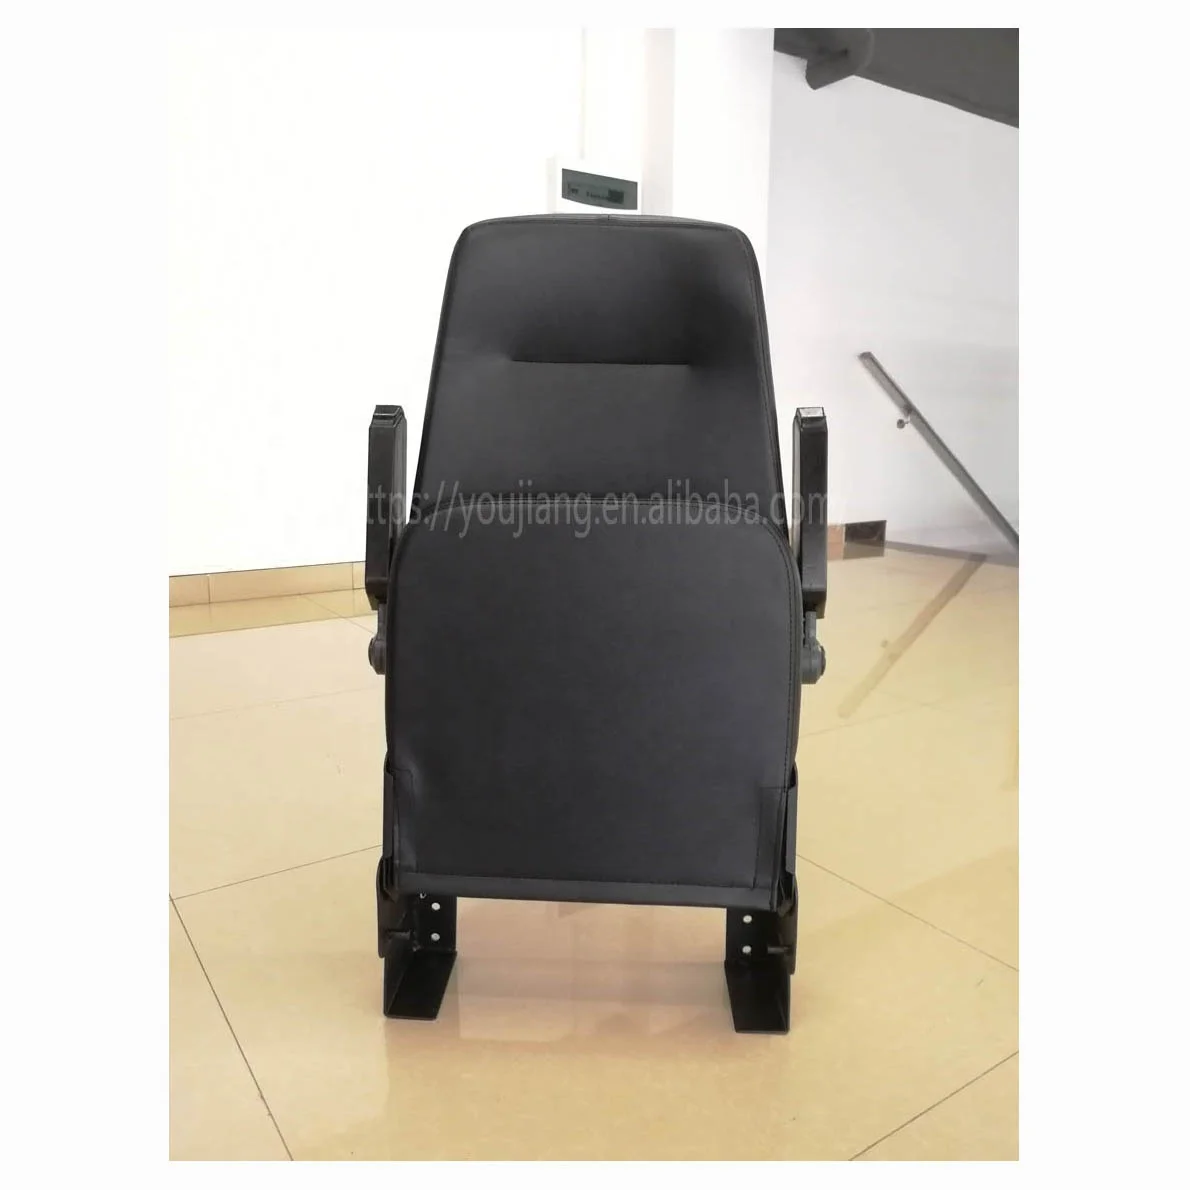 
Bus folding guide seat, floor mount jump seat  (62318501223)